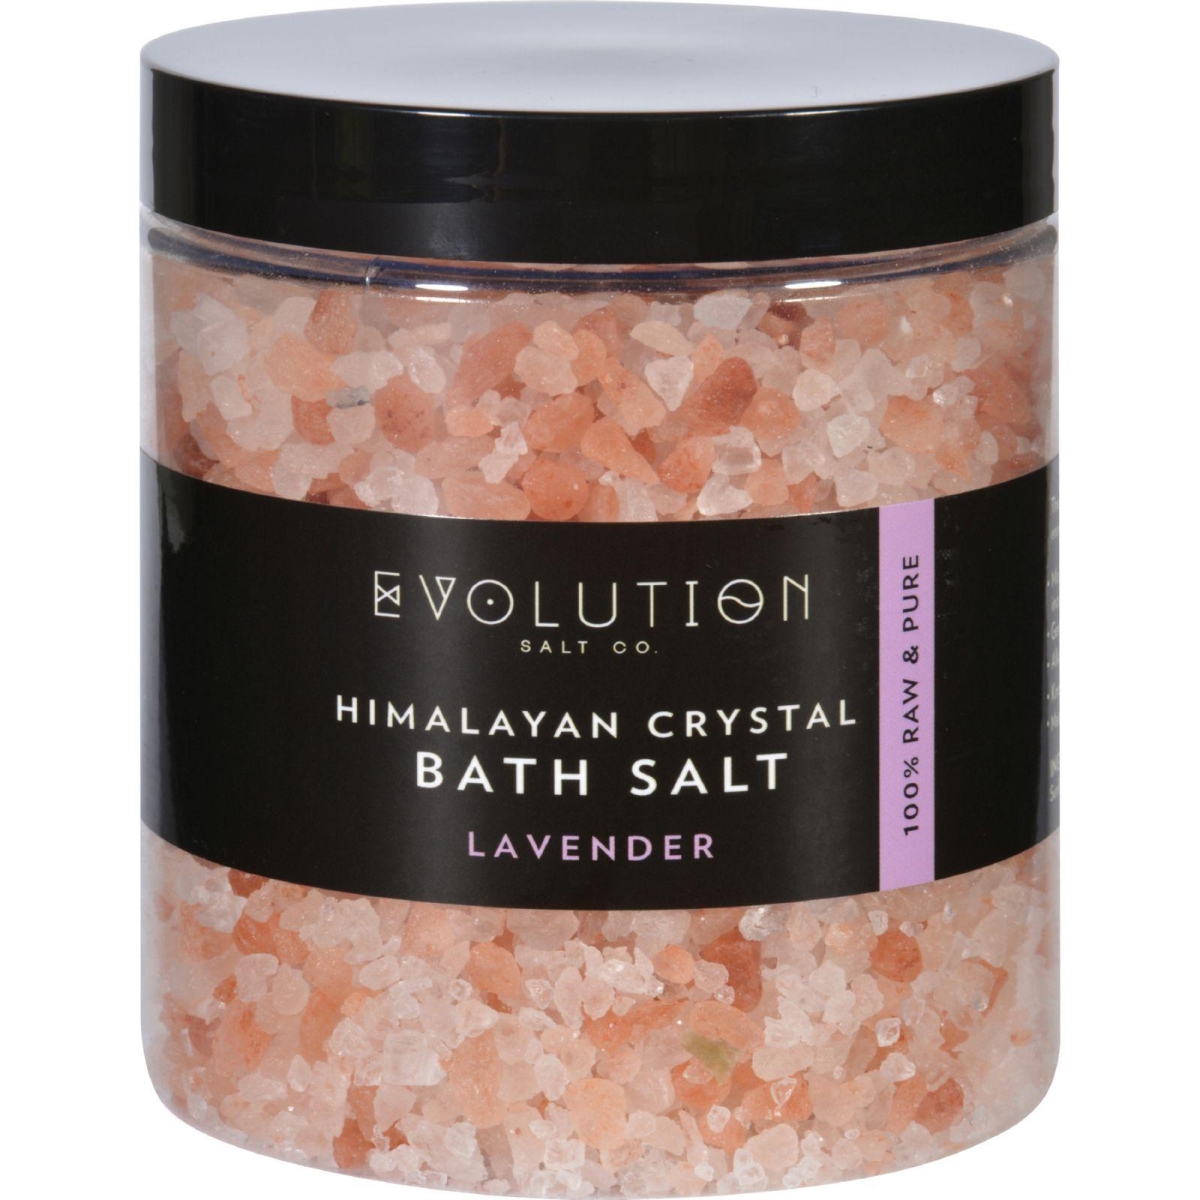 Hg1702166 26 Oz Himalayan Bath Salt, Coarse Lavender